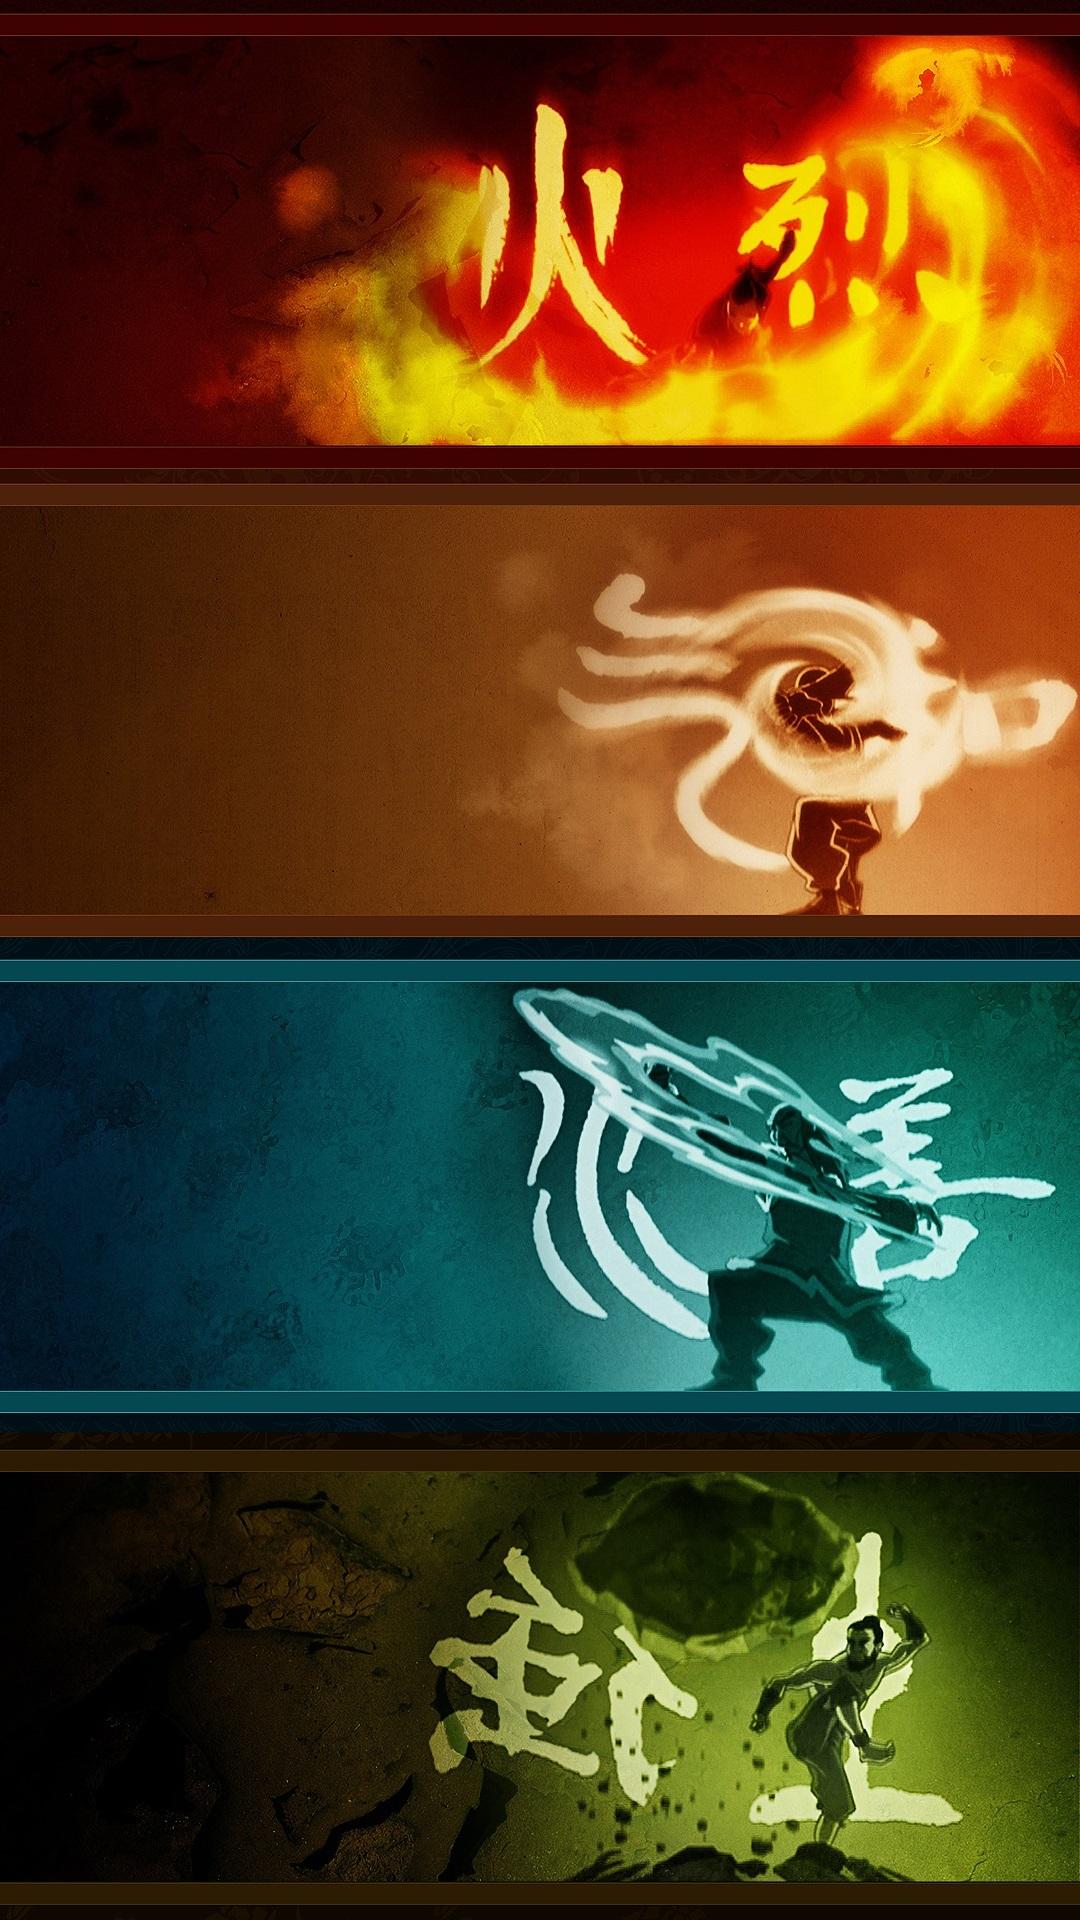 Thelastairbender - Avatar , HD Wallpaper & Backgrounds